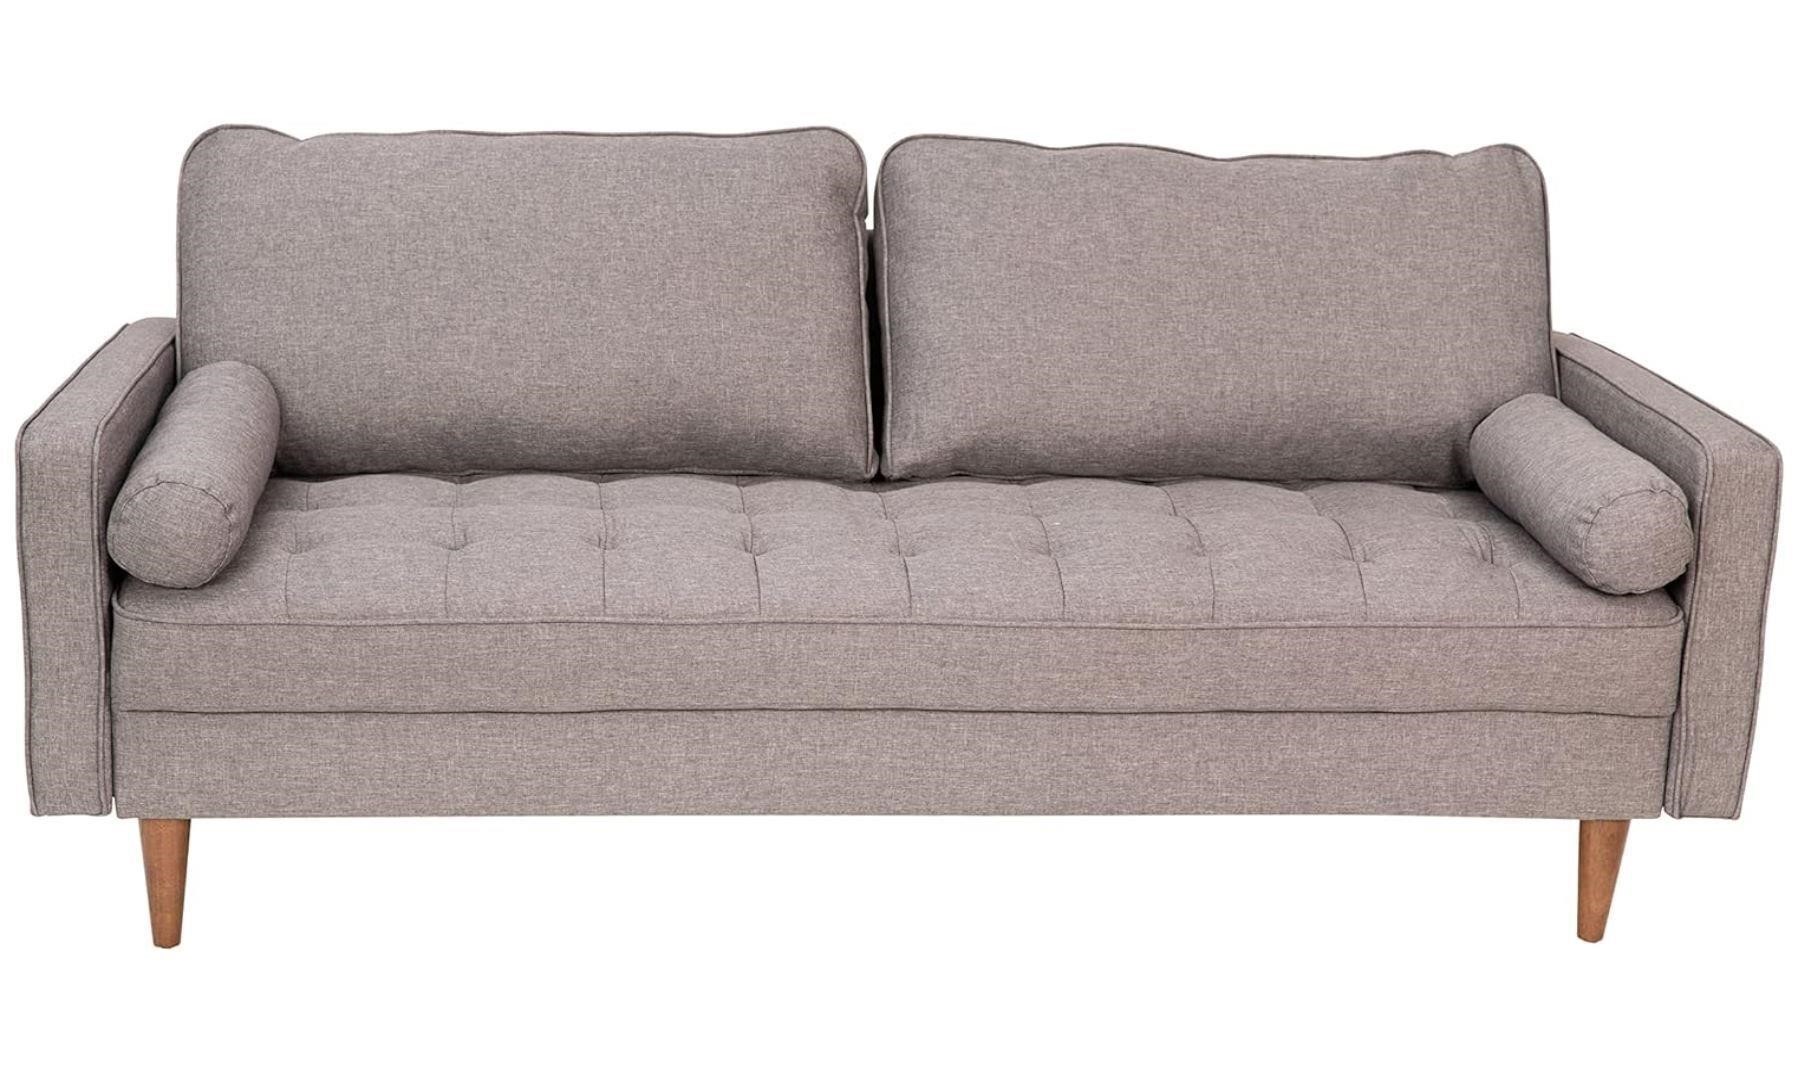 Tufted Upholstered Mid-Century Modern Sofa